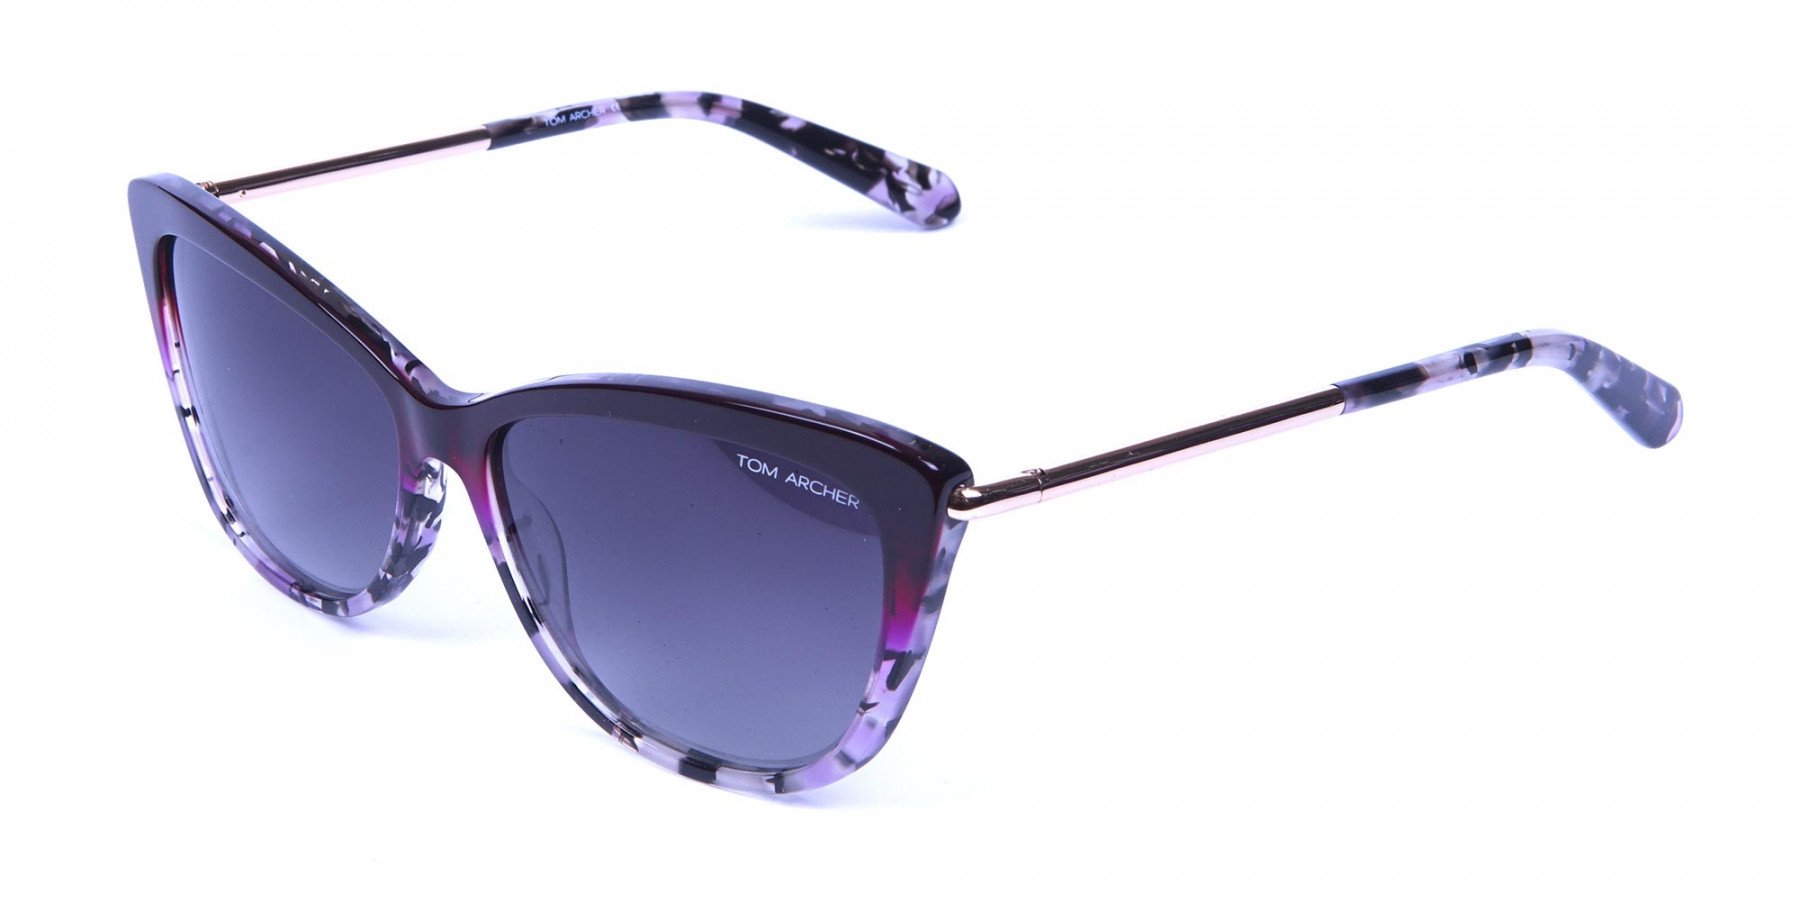 Drops of Wine Purple Cat Eye Sunglasses -2